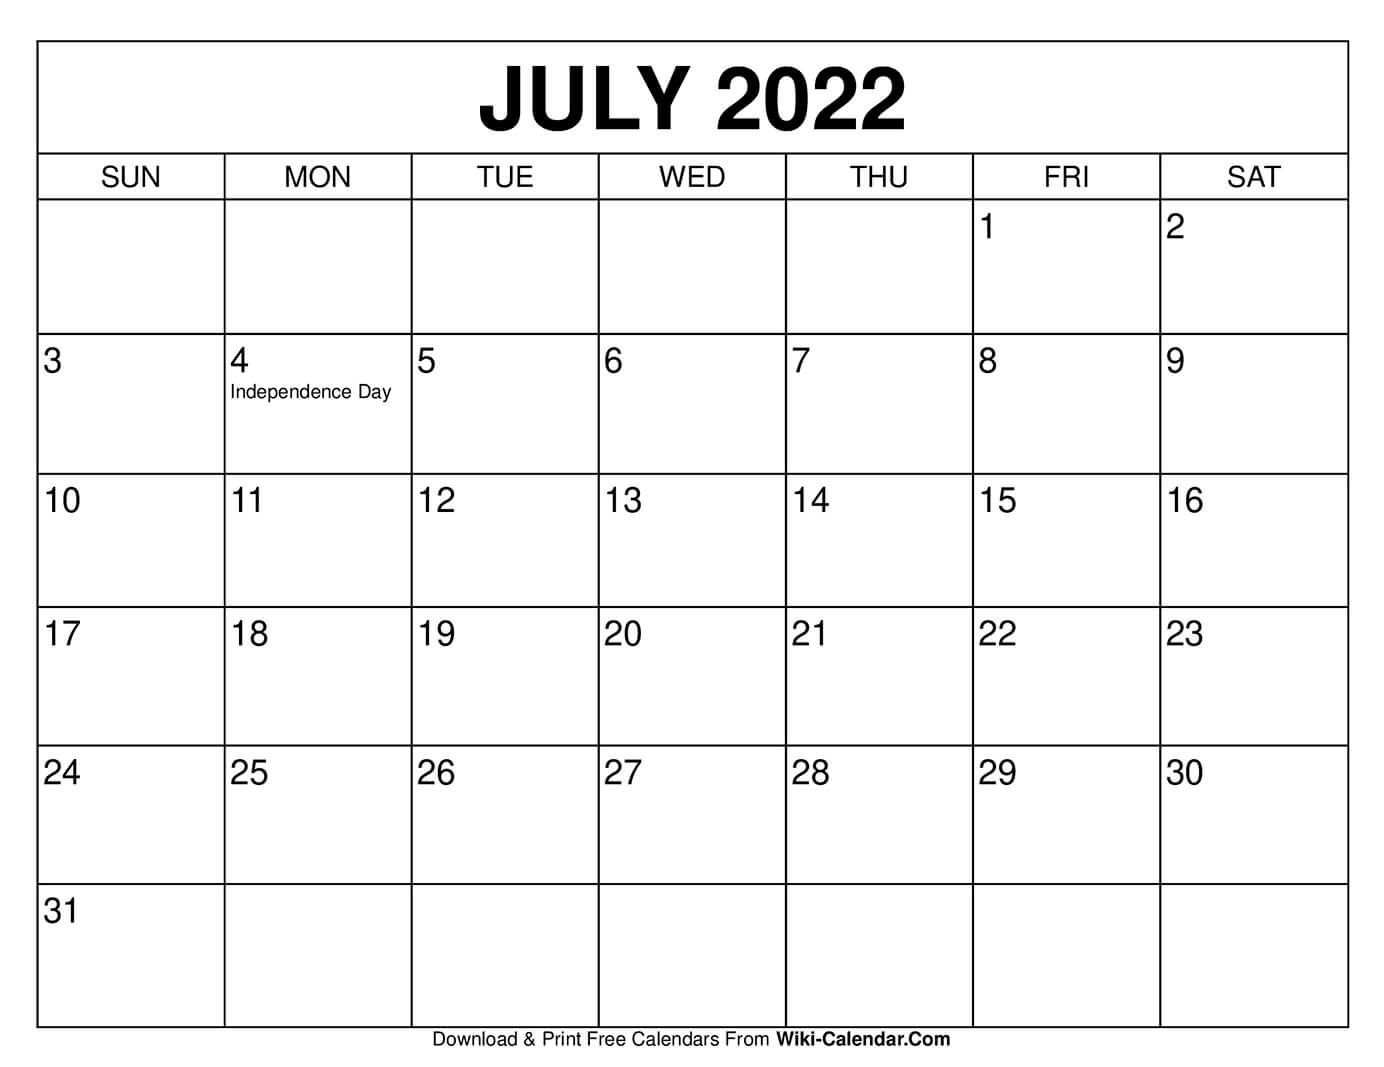 Calendar June 2021 - July 2022 - Twoteny  Free Printable Calendar July 2022 To June 2022